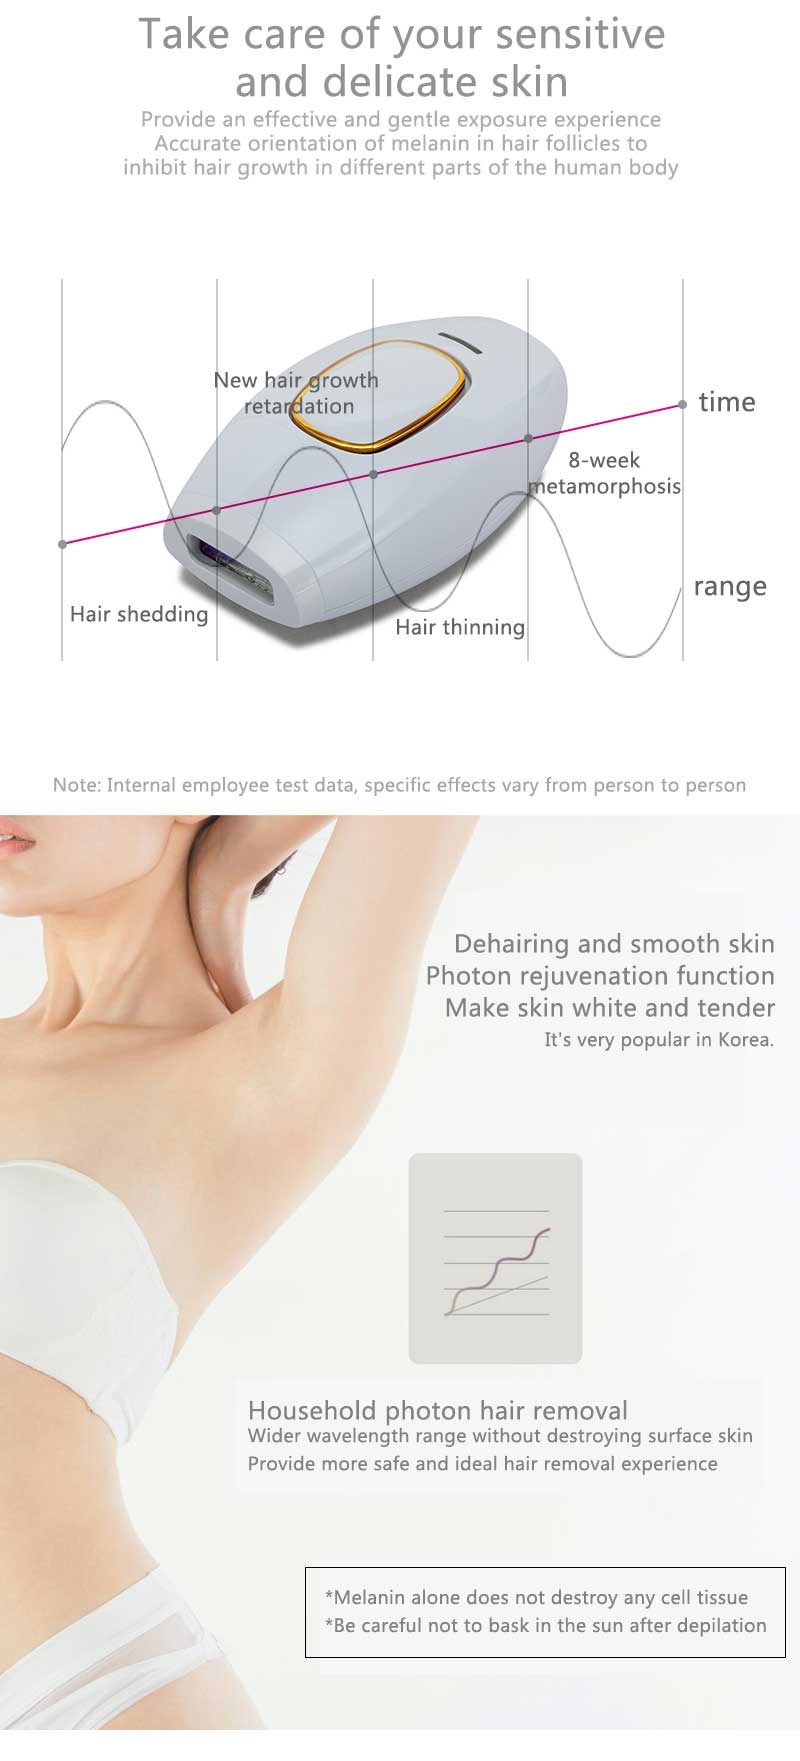 dravon ipl hair removal system